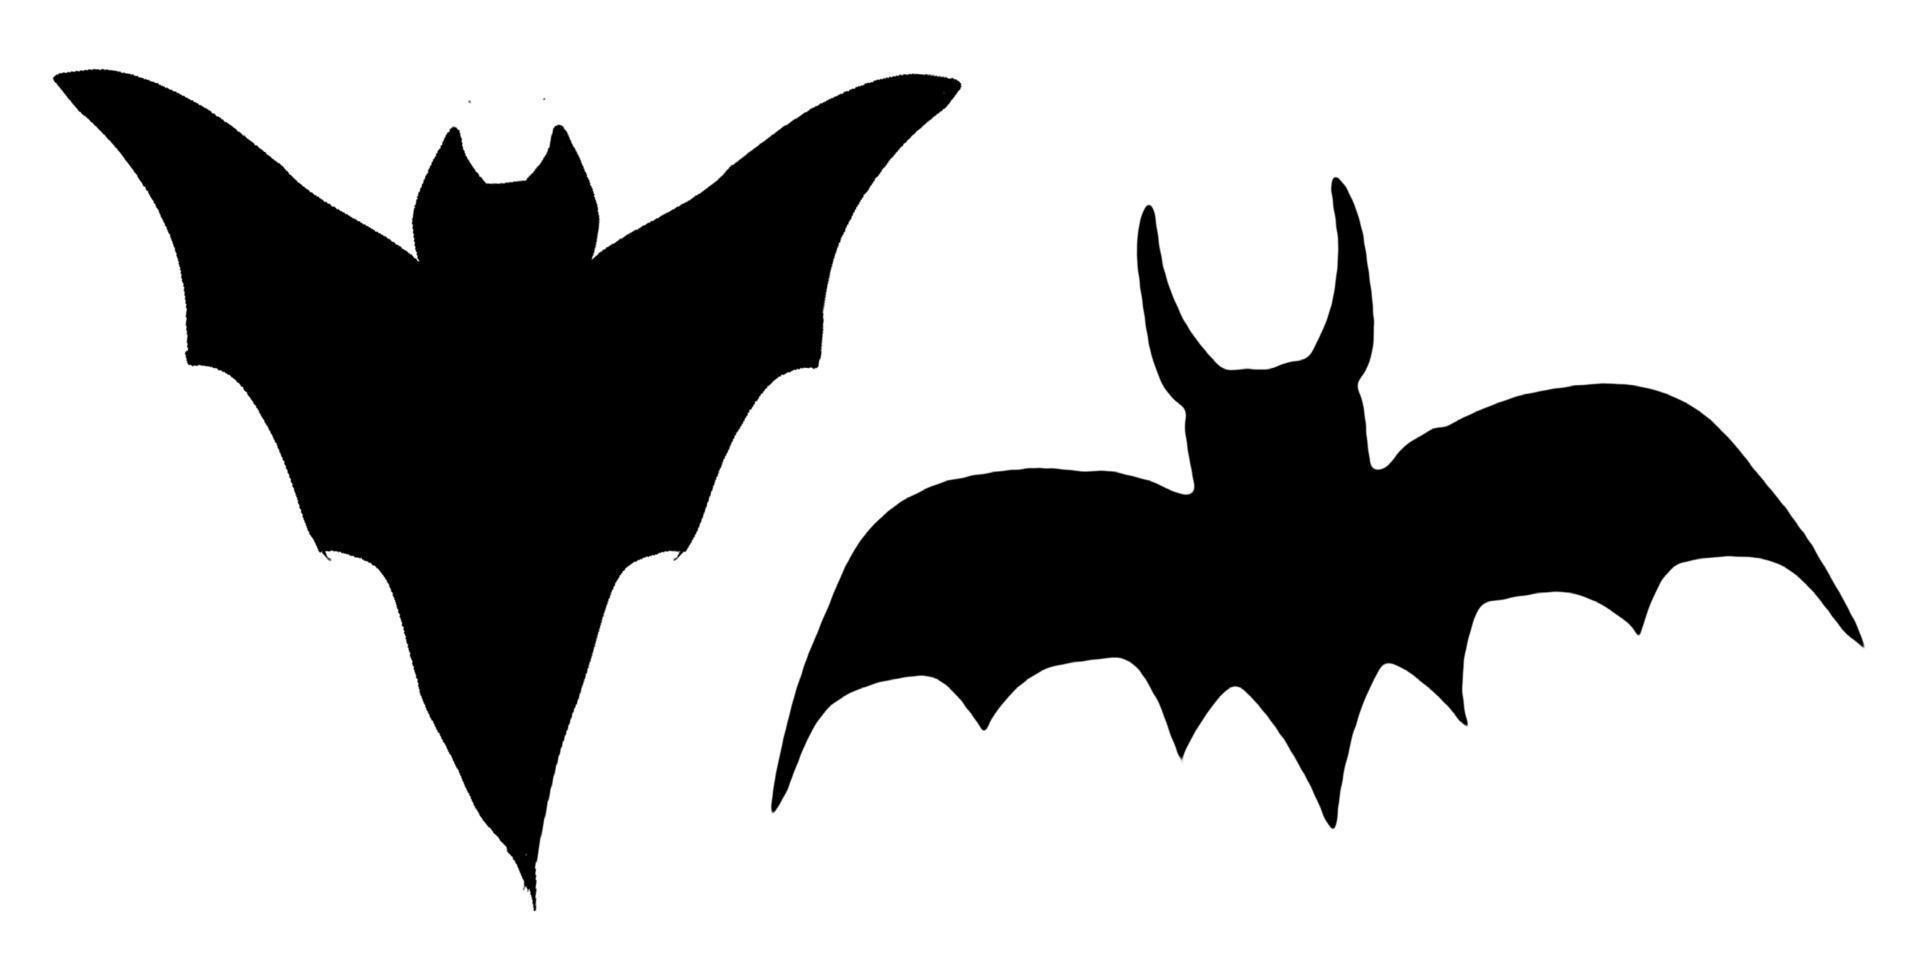 Hand drawn halloween bat vector illustration